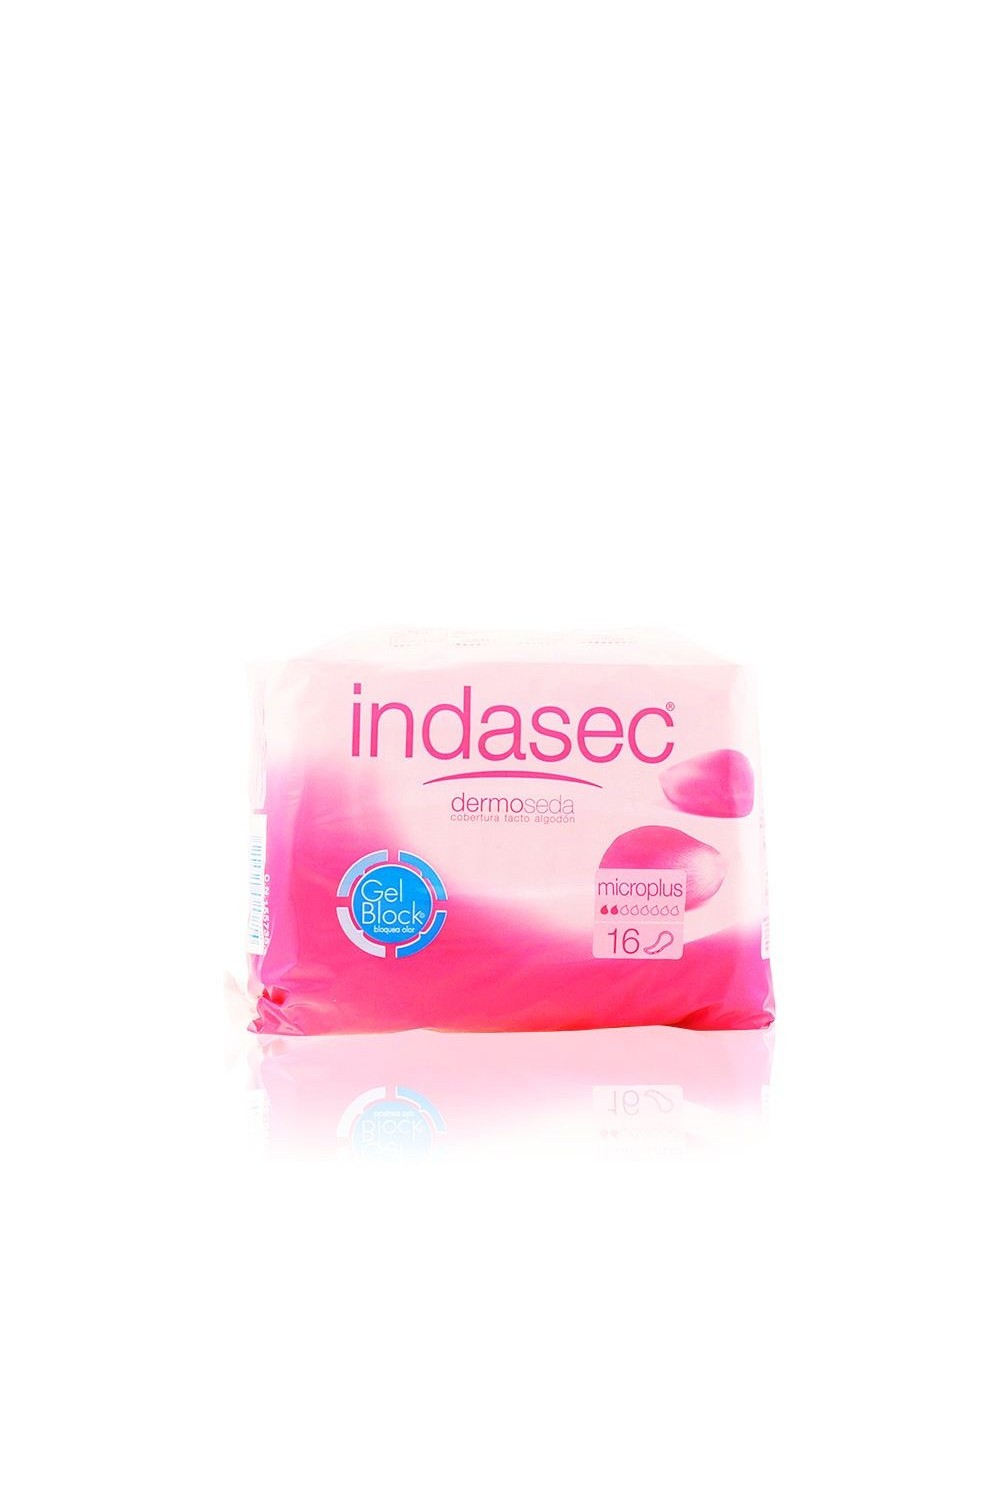 Indasec Dermoseda Compresses Incontinence Micro Plus 16 Units